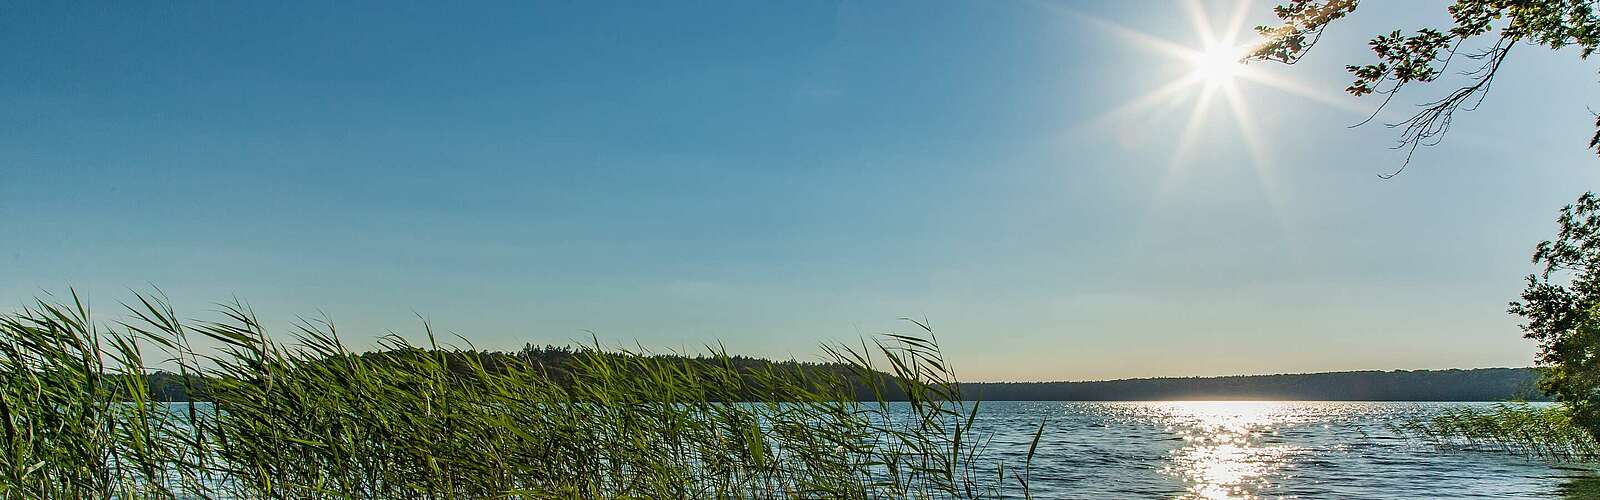 Stechlinsee im Ruppiner Seenland,
        
    

        Foto: TMB-Fotoarchiv/Steffen Lehmann